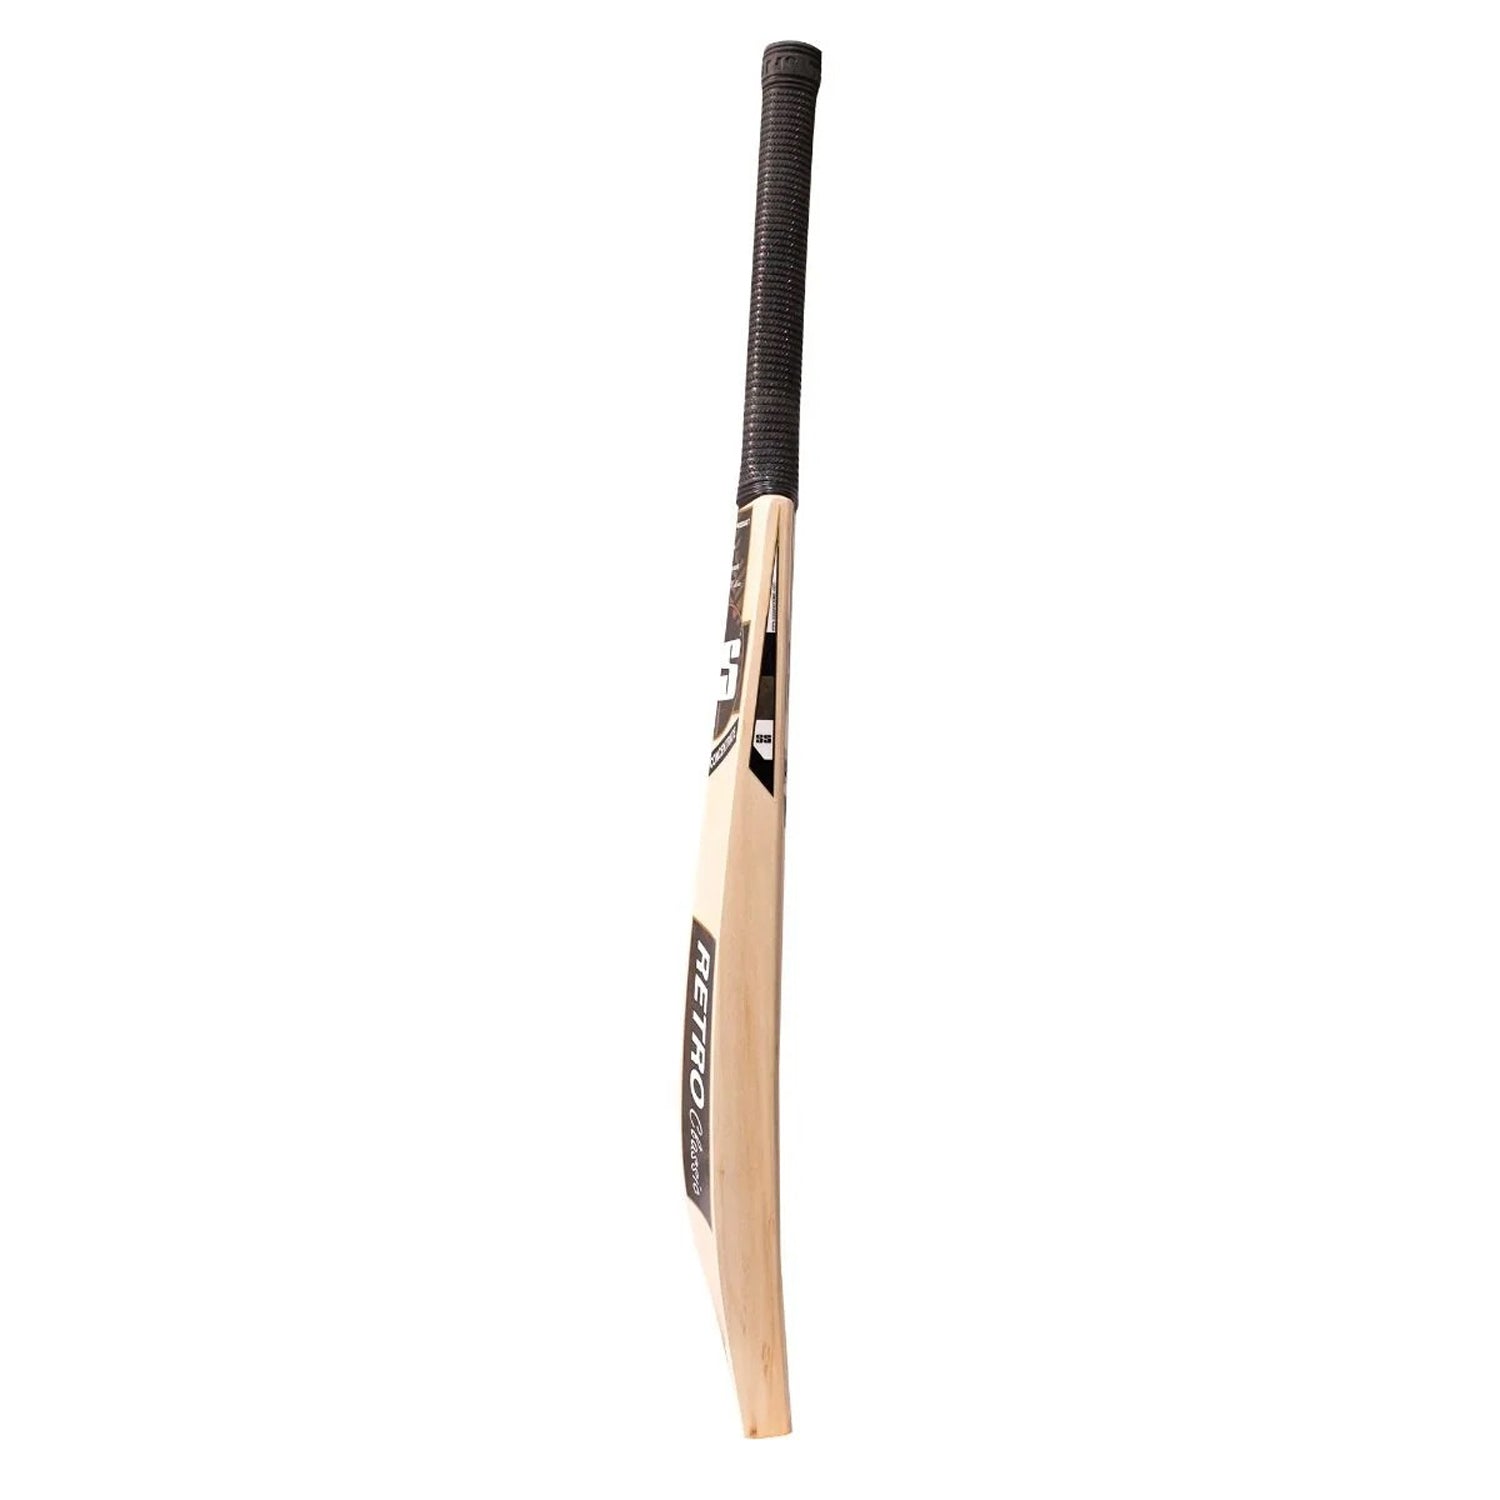 SS VA-900 Retro Instinct English Willow Cricket Bat - Best Price online Prokicksports.com